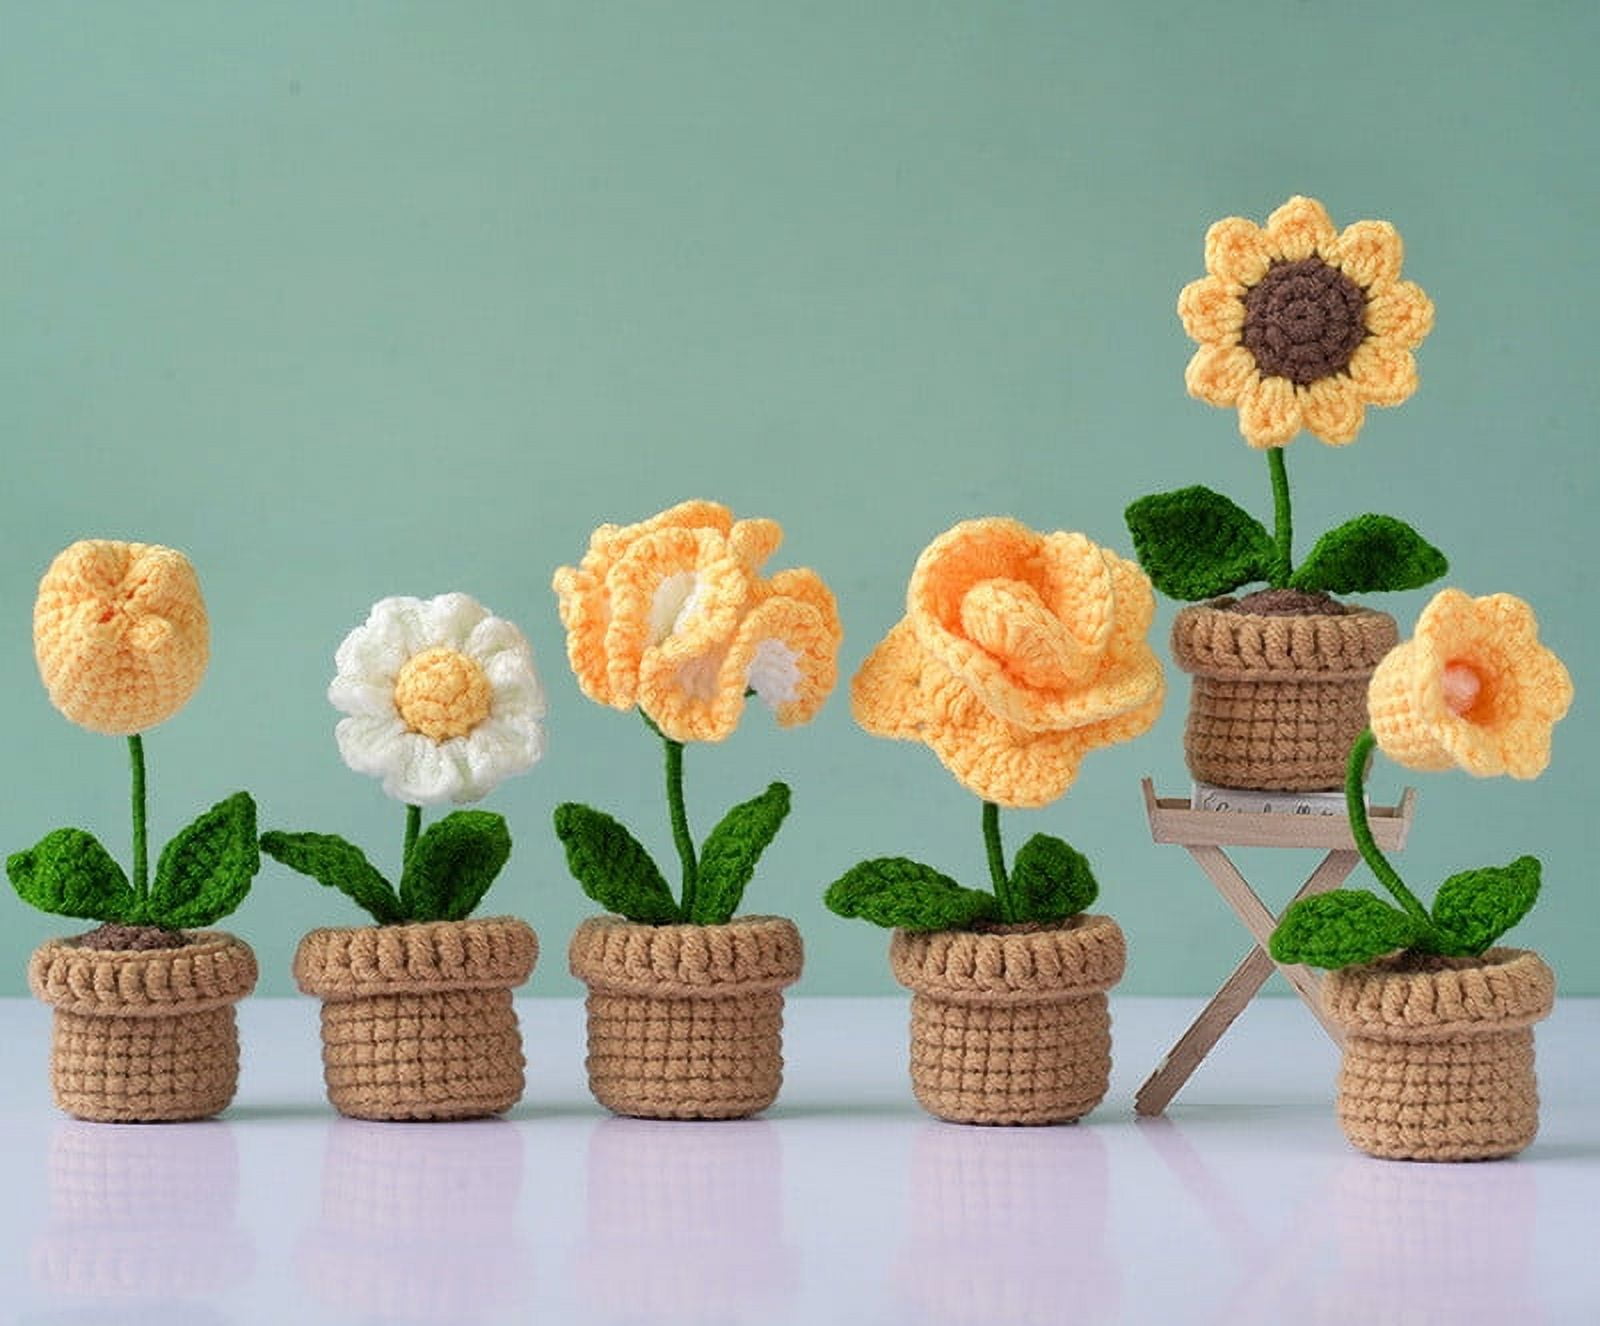 Chainplus Crochet Kit for Beginners, 6 Pcs Potted Flowers DIY Kit for  Adults and Kids, Crochet Starter Knitting Kit for Complete Beginners  (Yellow) 